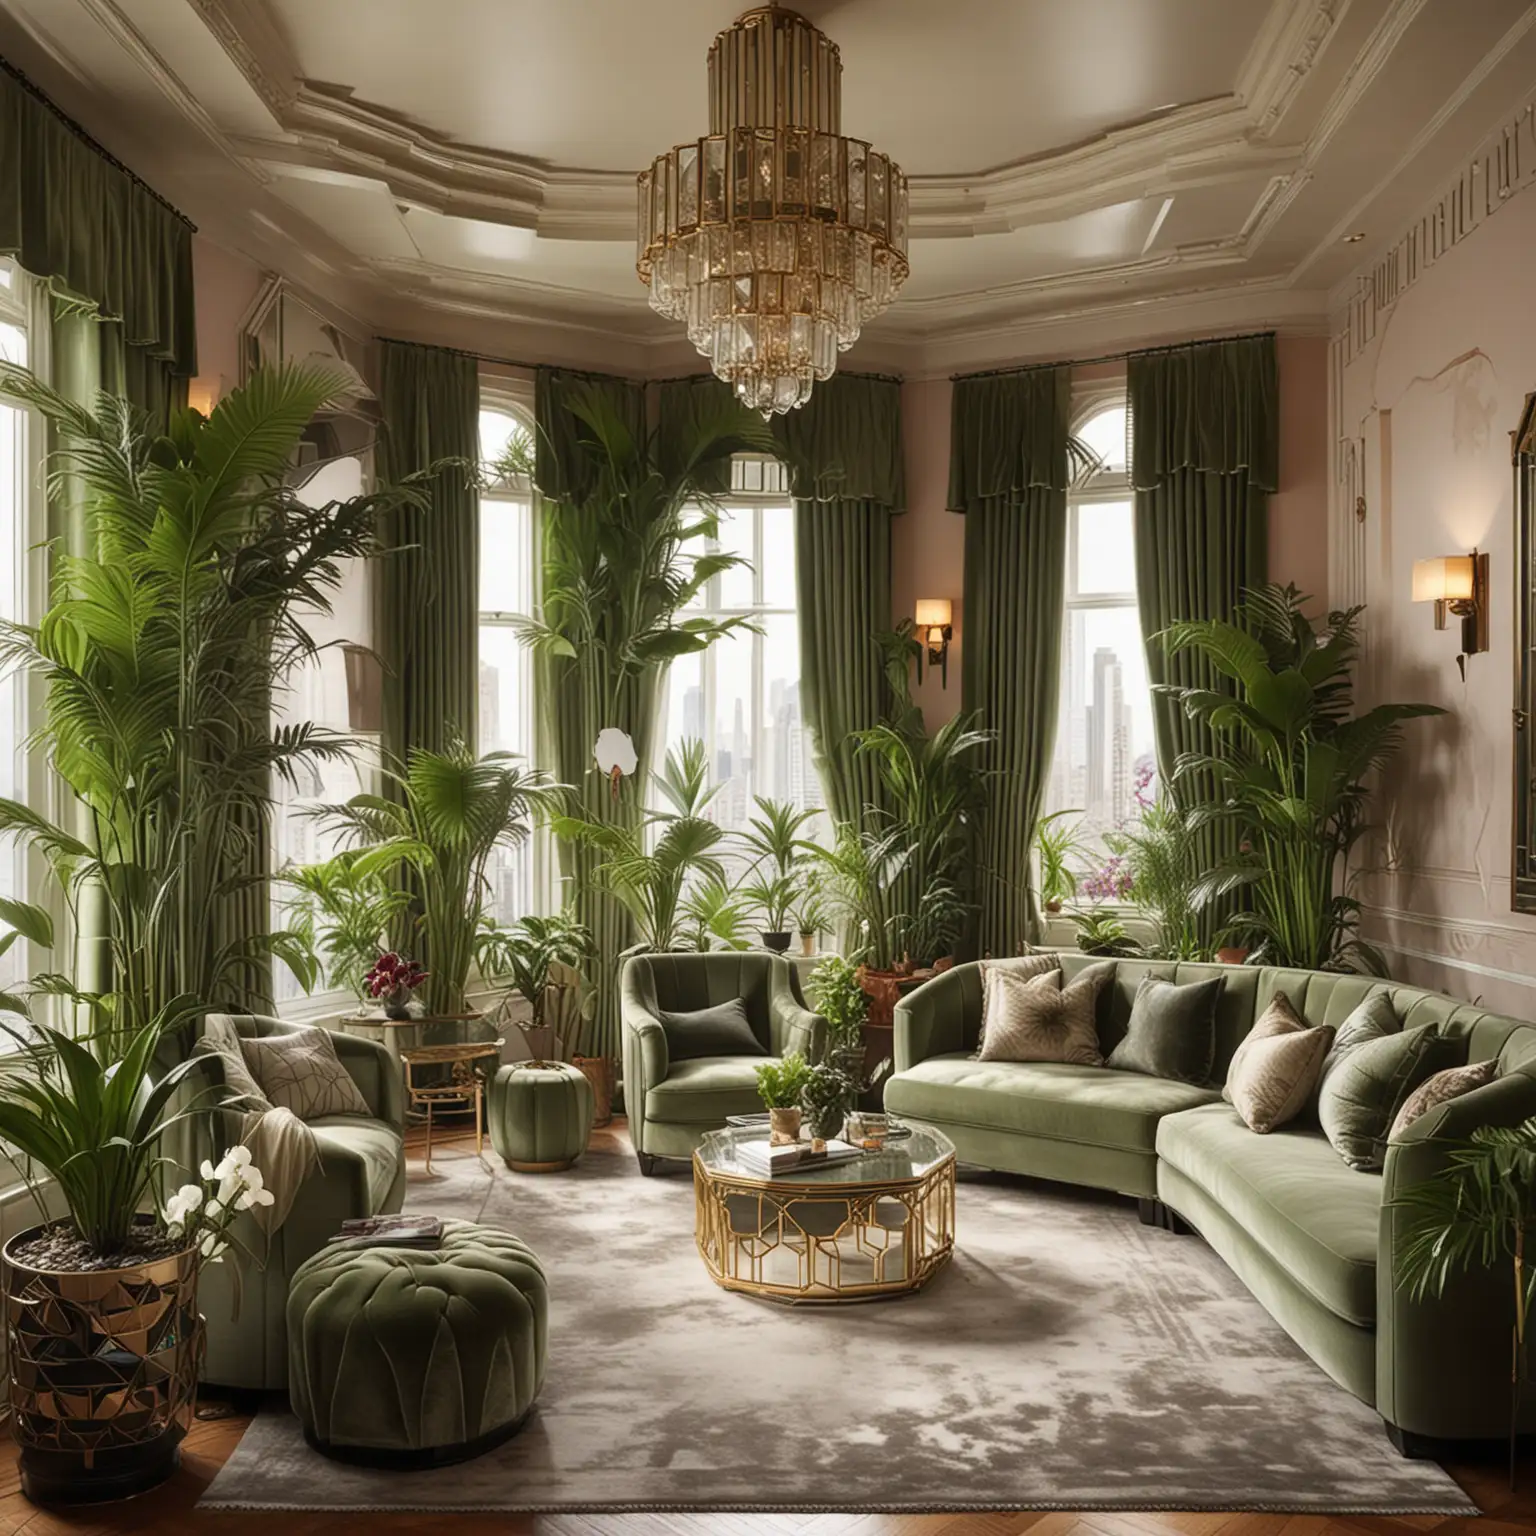 Art-Deco-Sitting-Room-with-Plants-Cozy-Spacious-Interior-Design